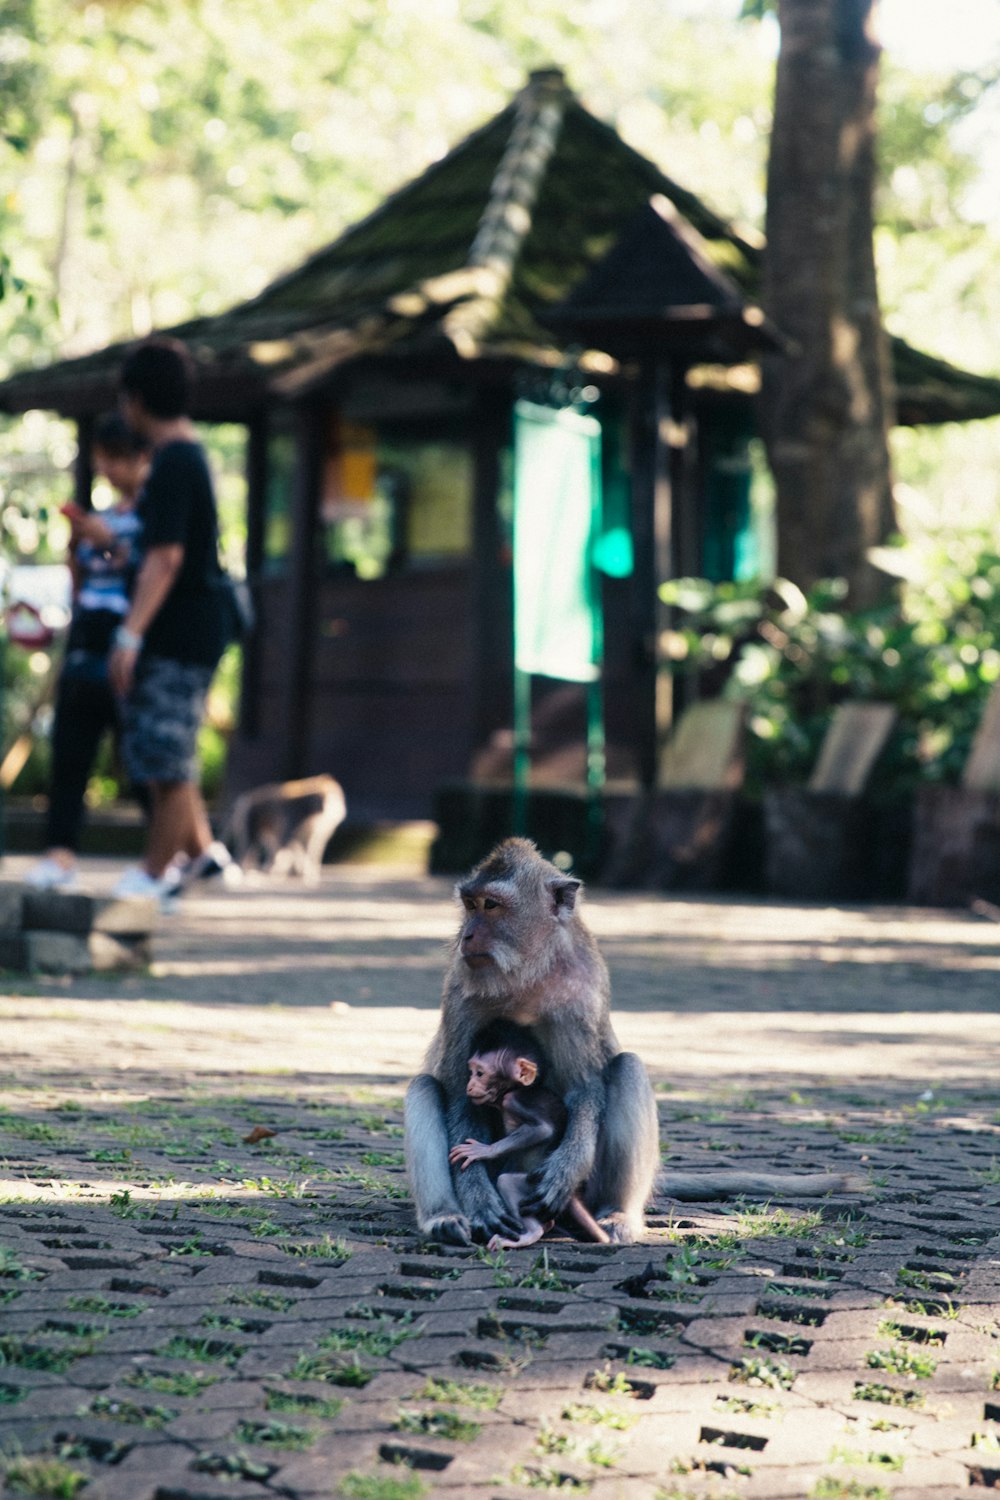 two monkey sitting on gray blocks during daytime